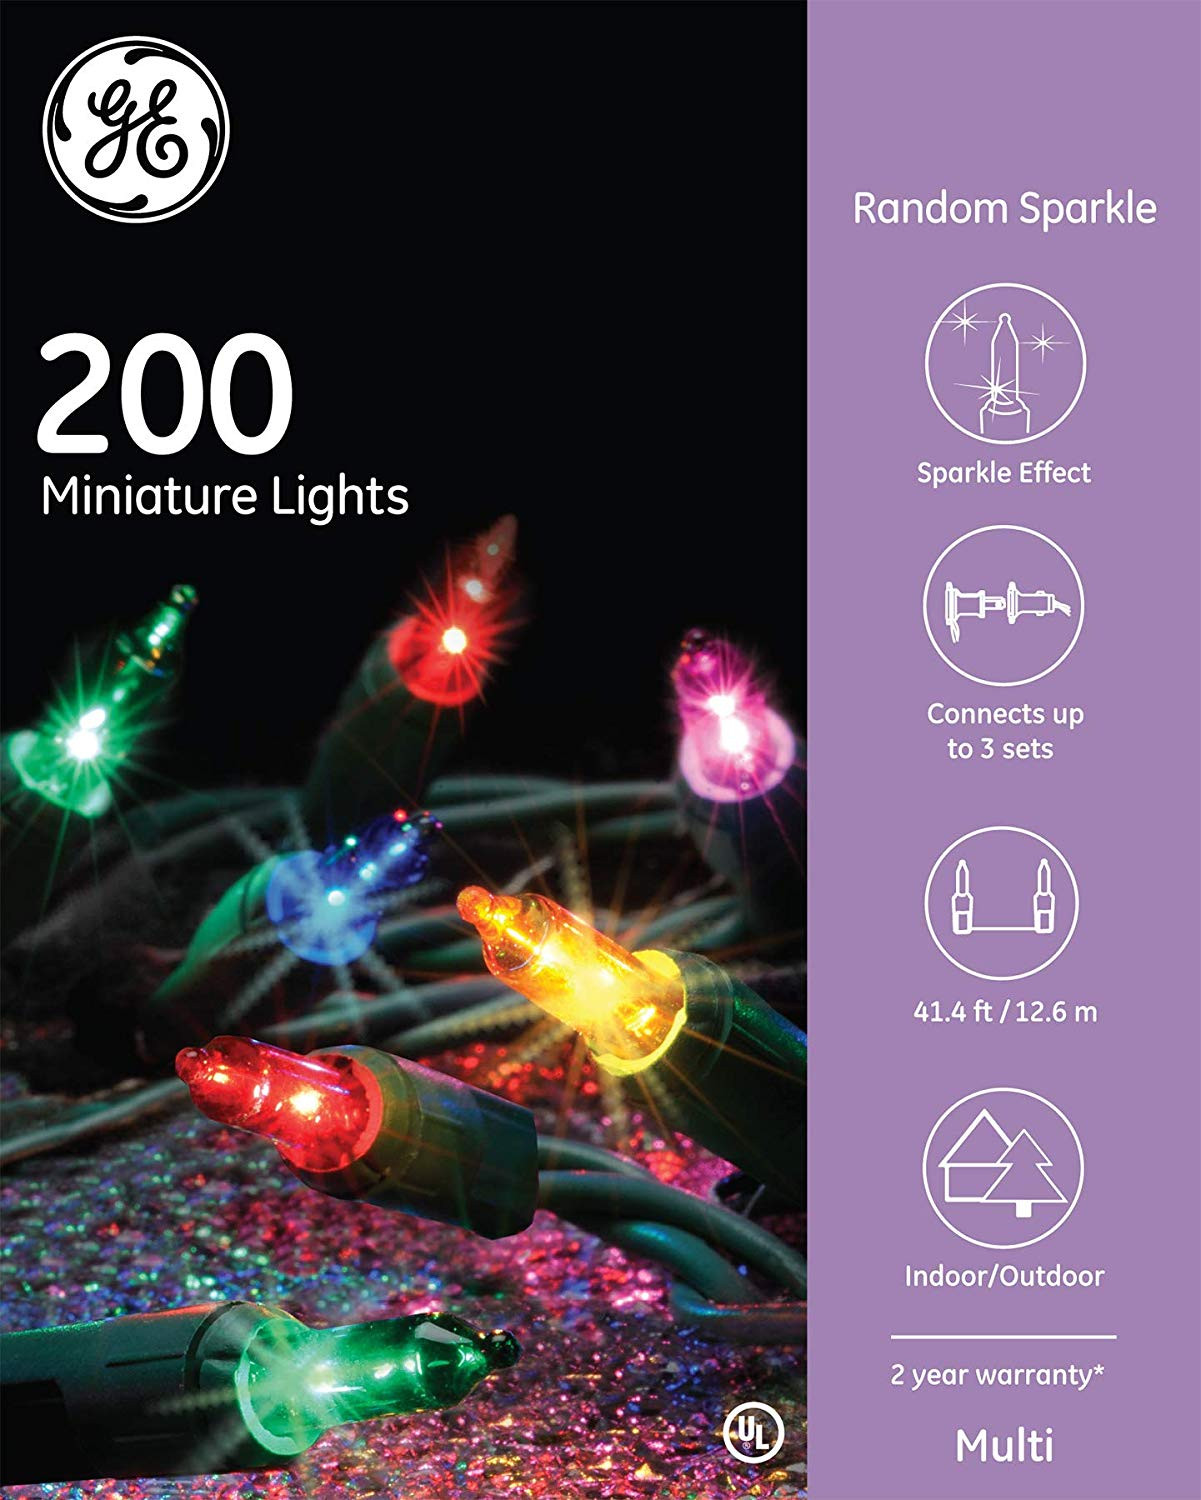 Ge Random Sparkle 200 Miniature Multi-Color Light String Set 